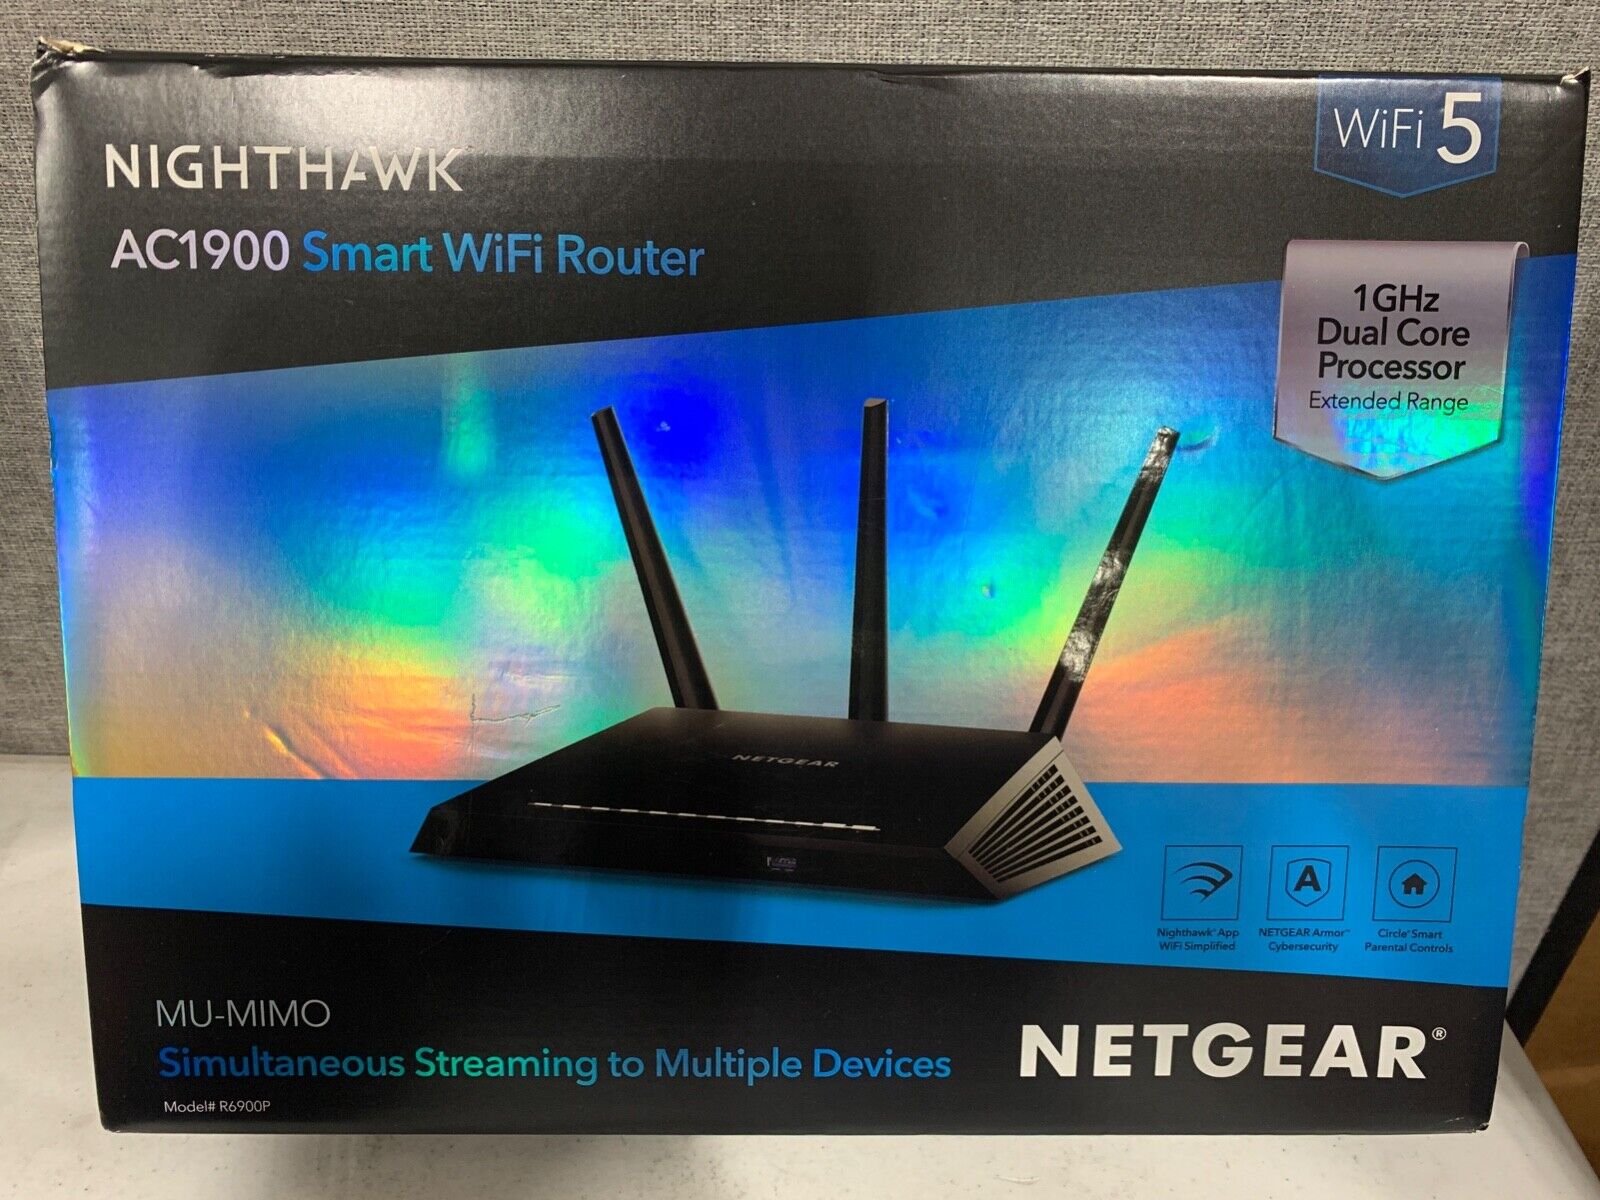 NETGEAR R6900P-100NAS Nighthawk AC1900 Dual Band WiFi Router